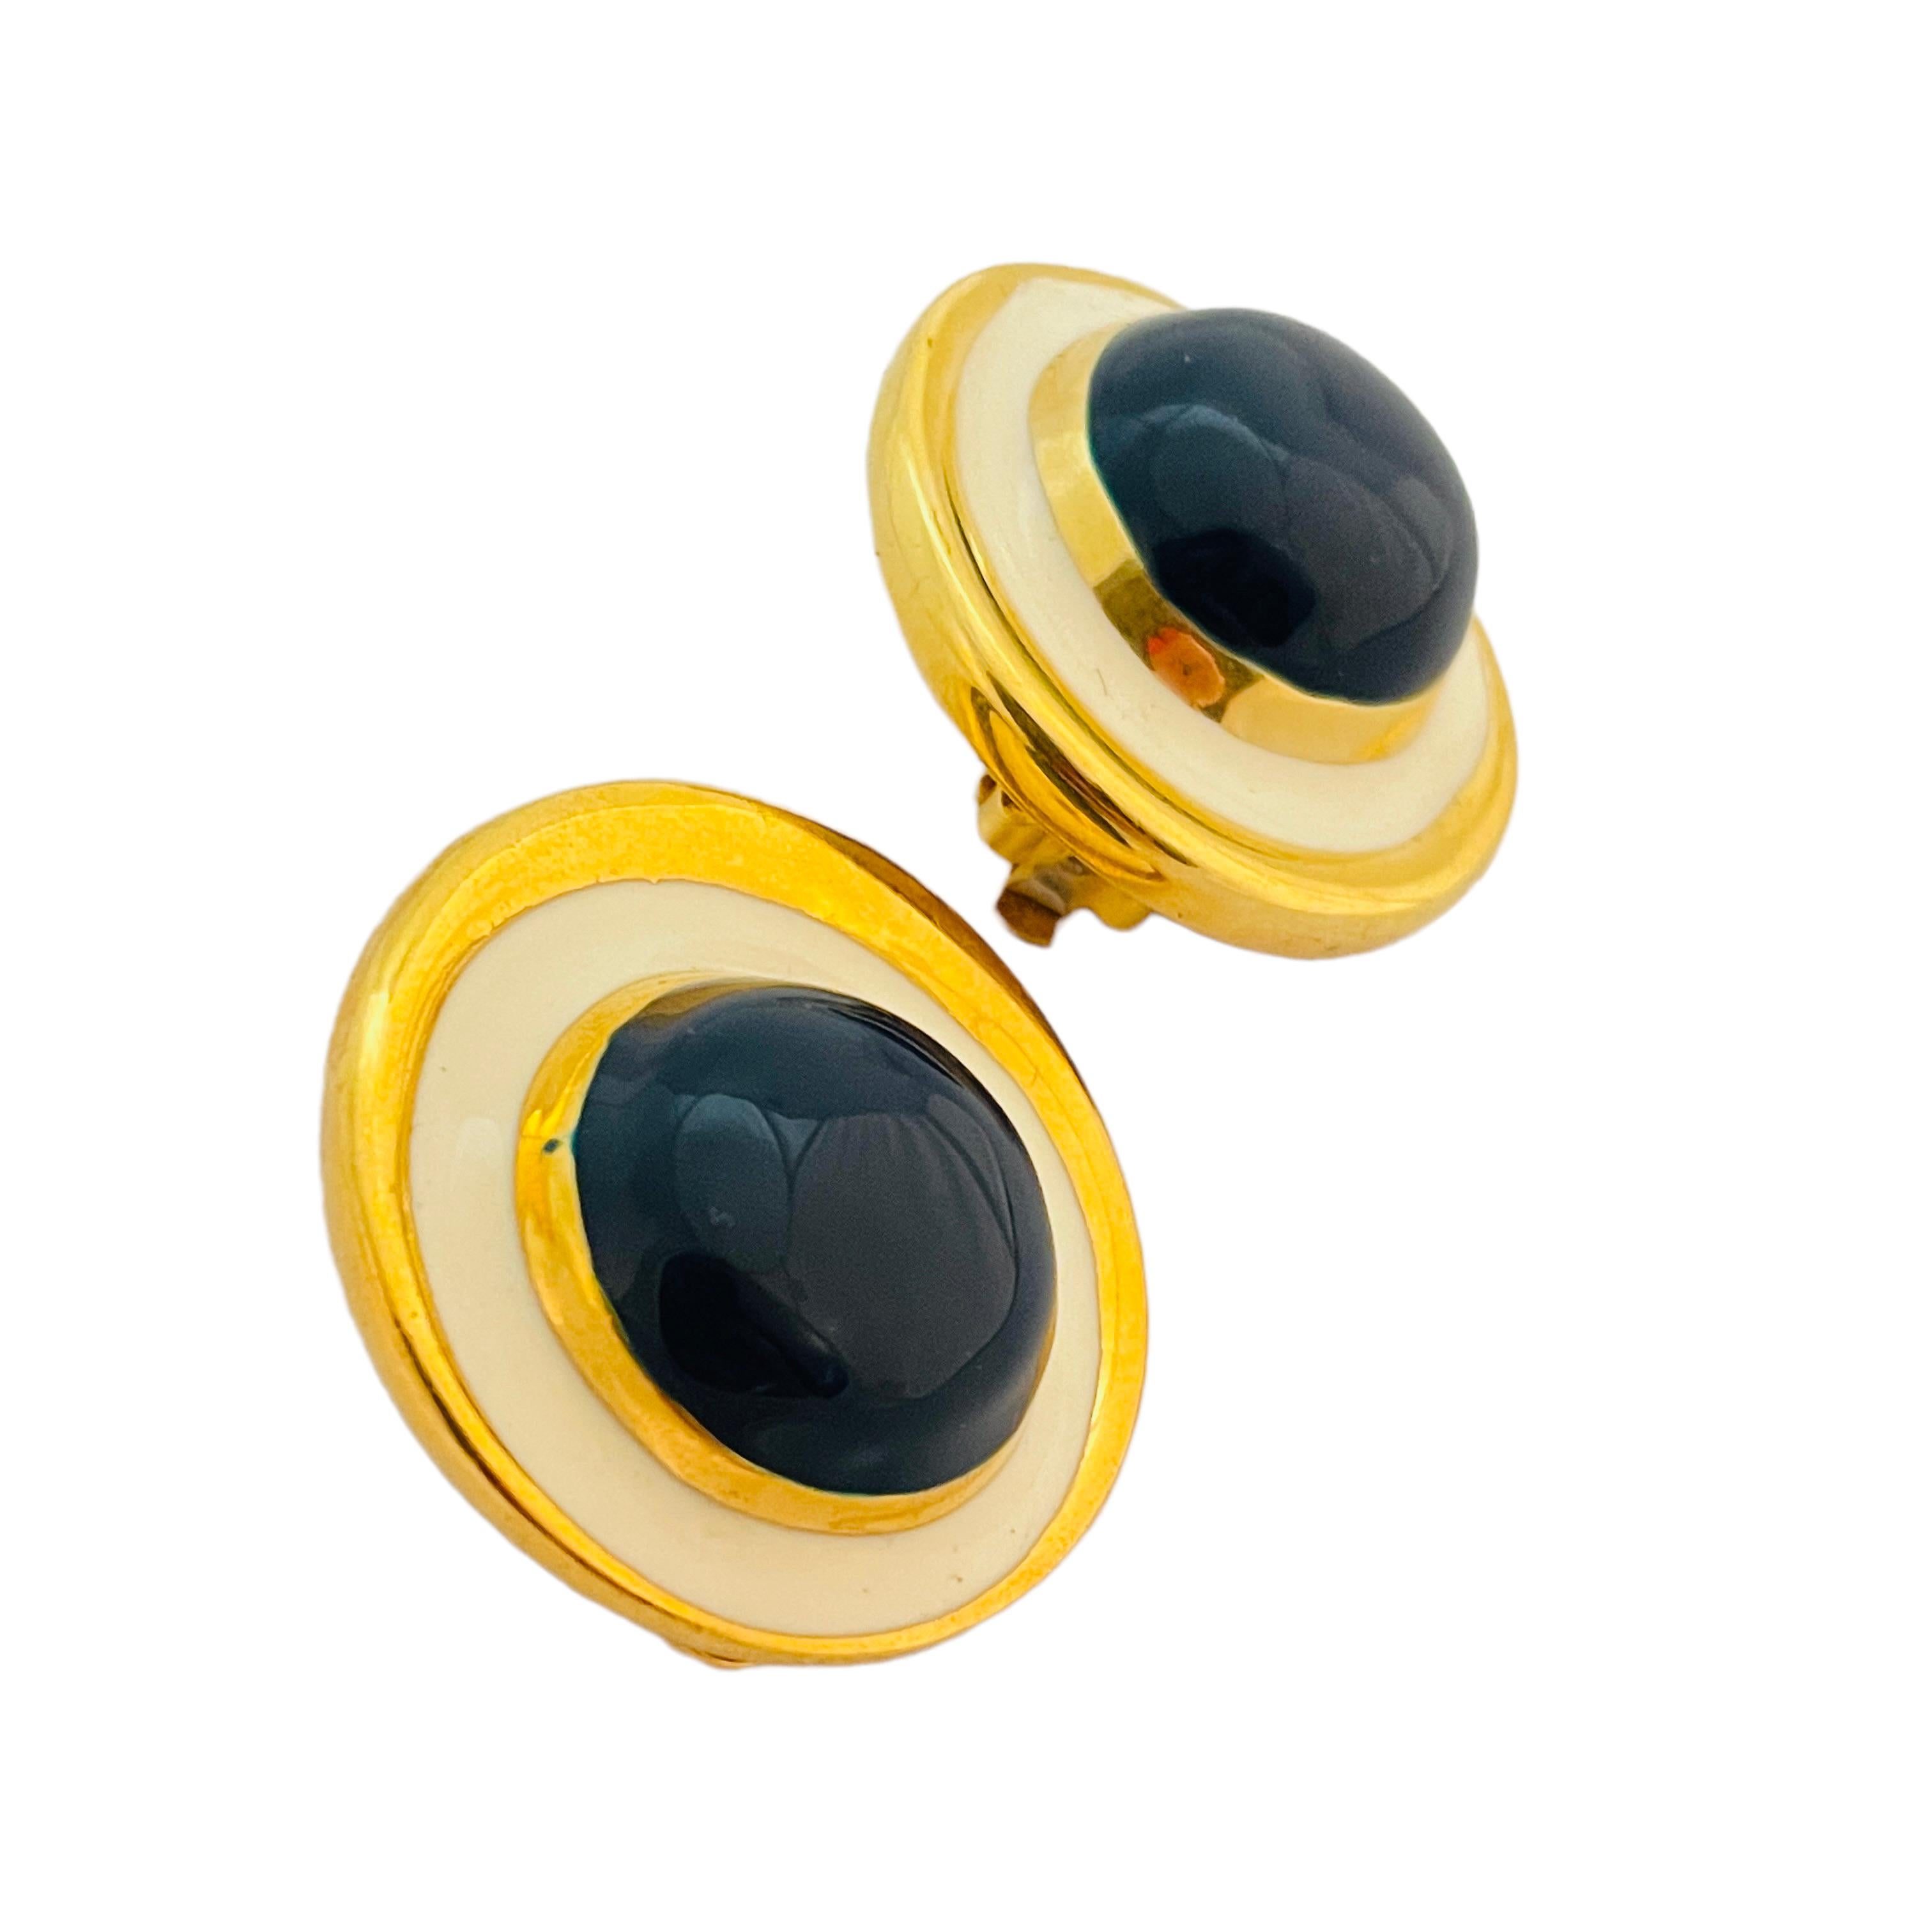 DETAILS

• unsigned

• gold tone with enamel

• vintage designer clip on earrings

MEASUREMENTS

• 1.25